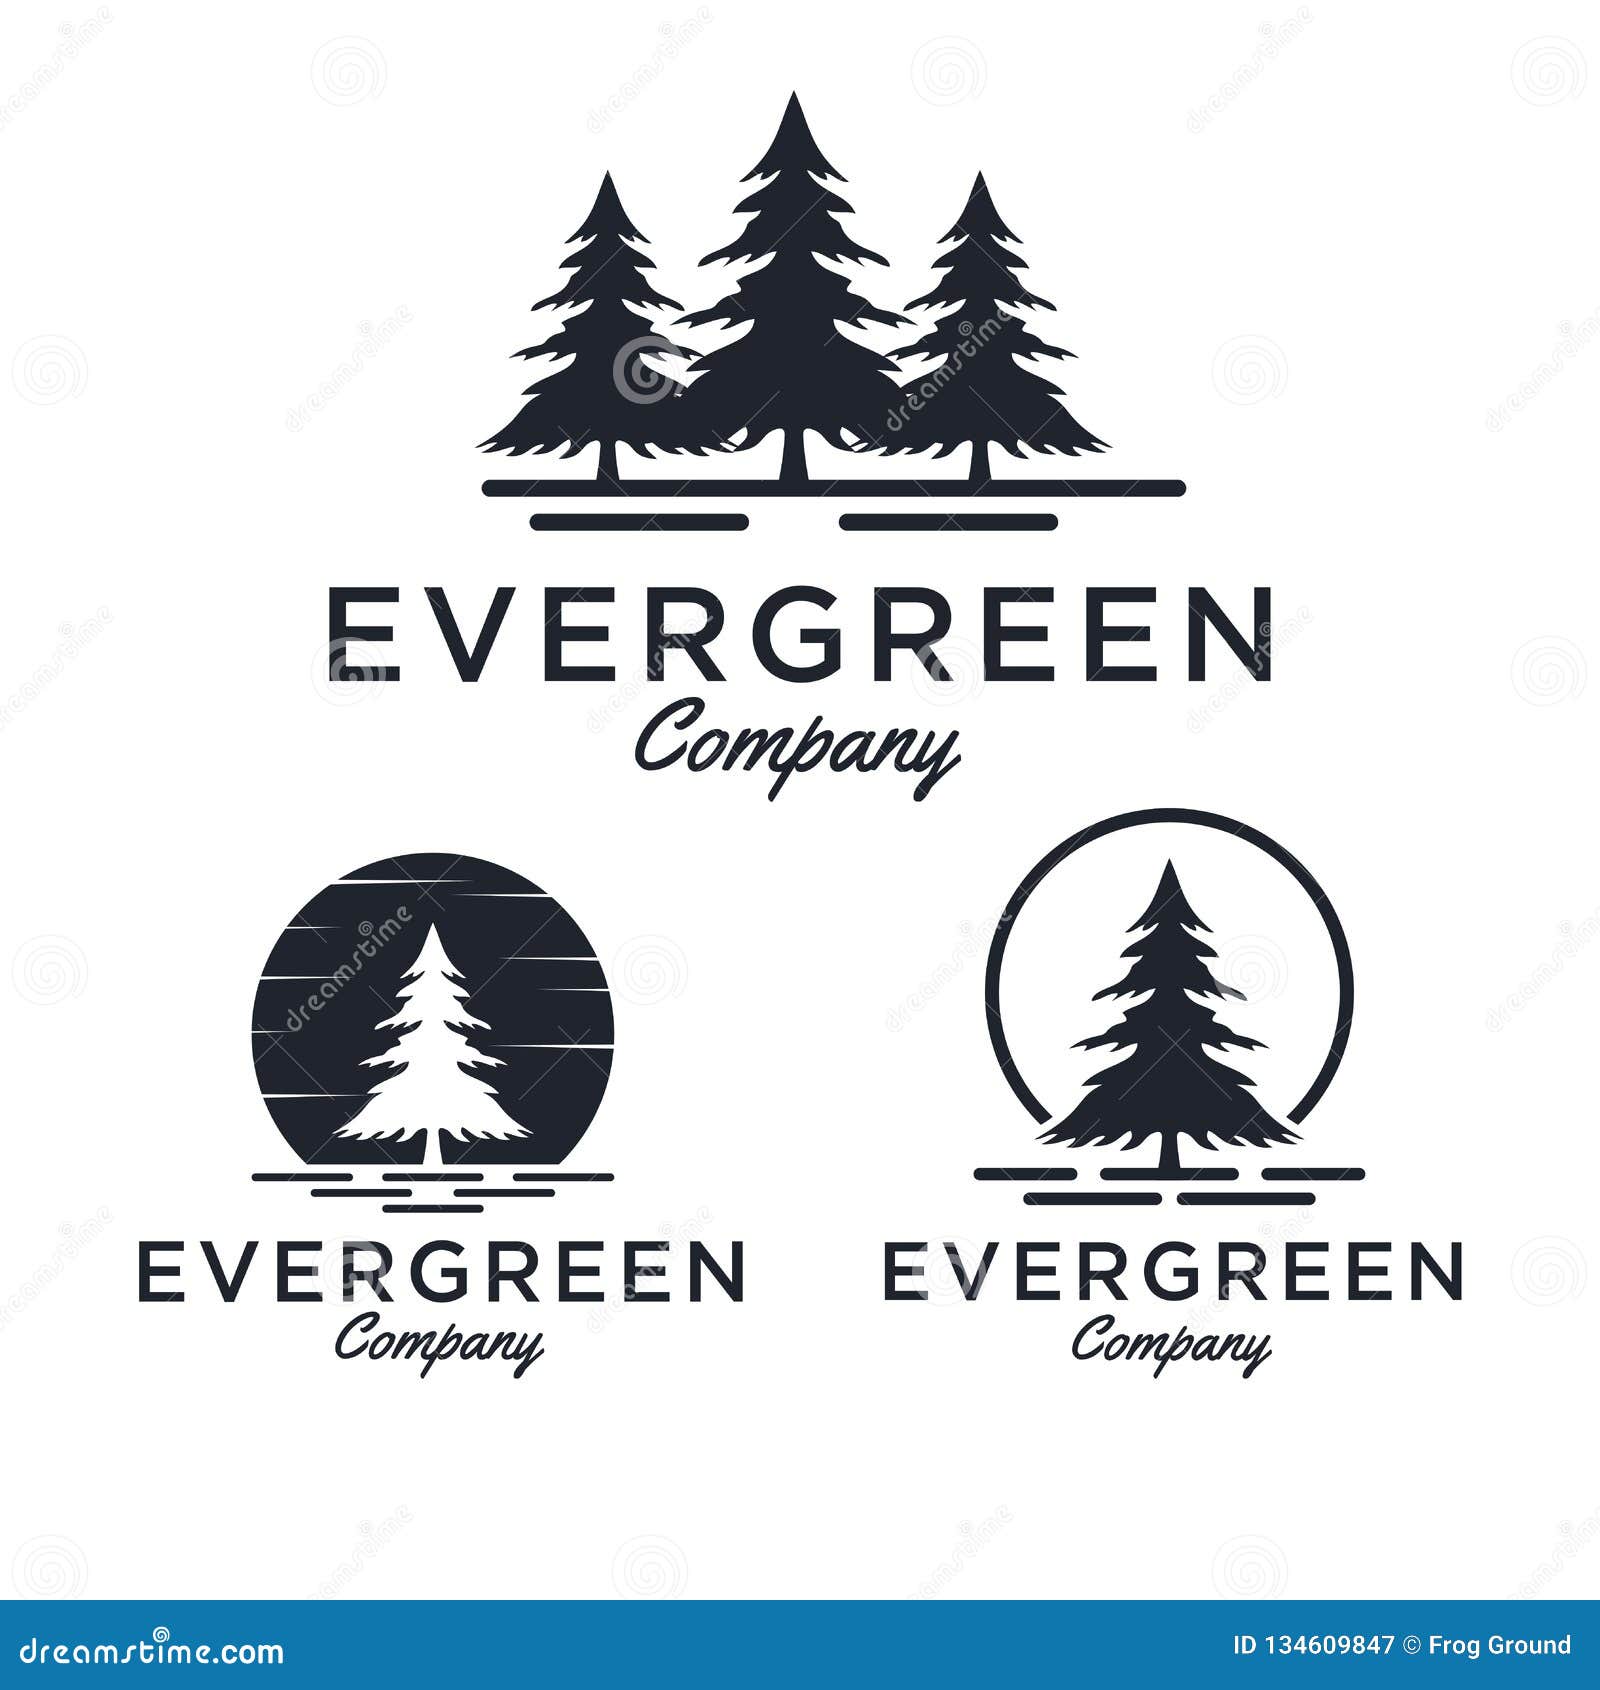 evergreen / pine tree logo  inspiration - 